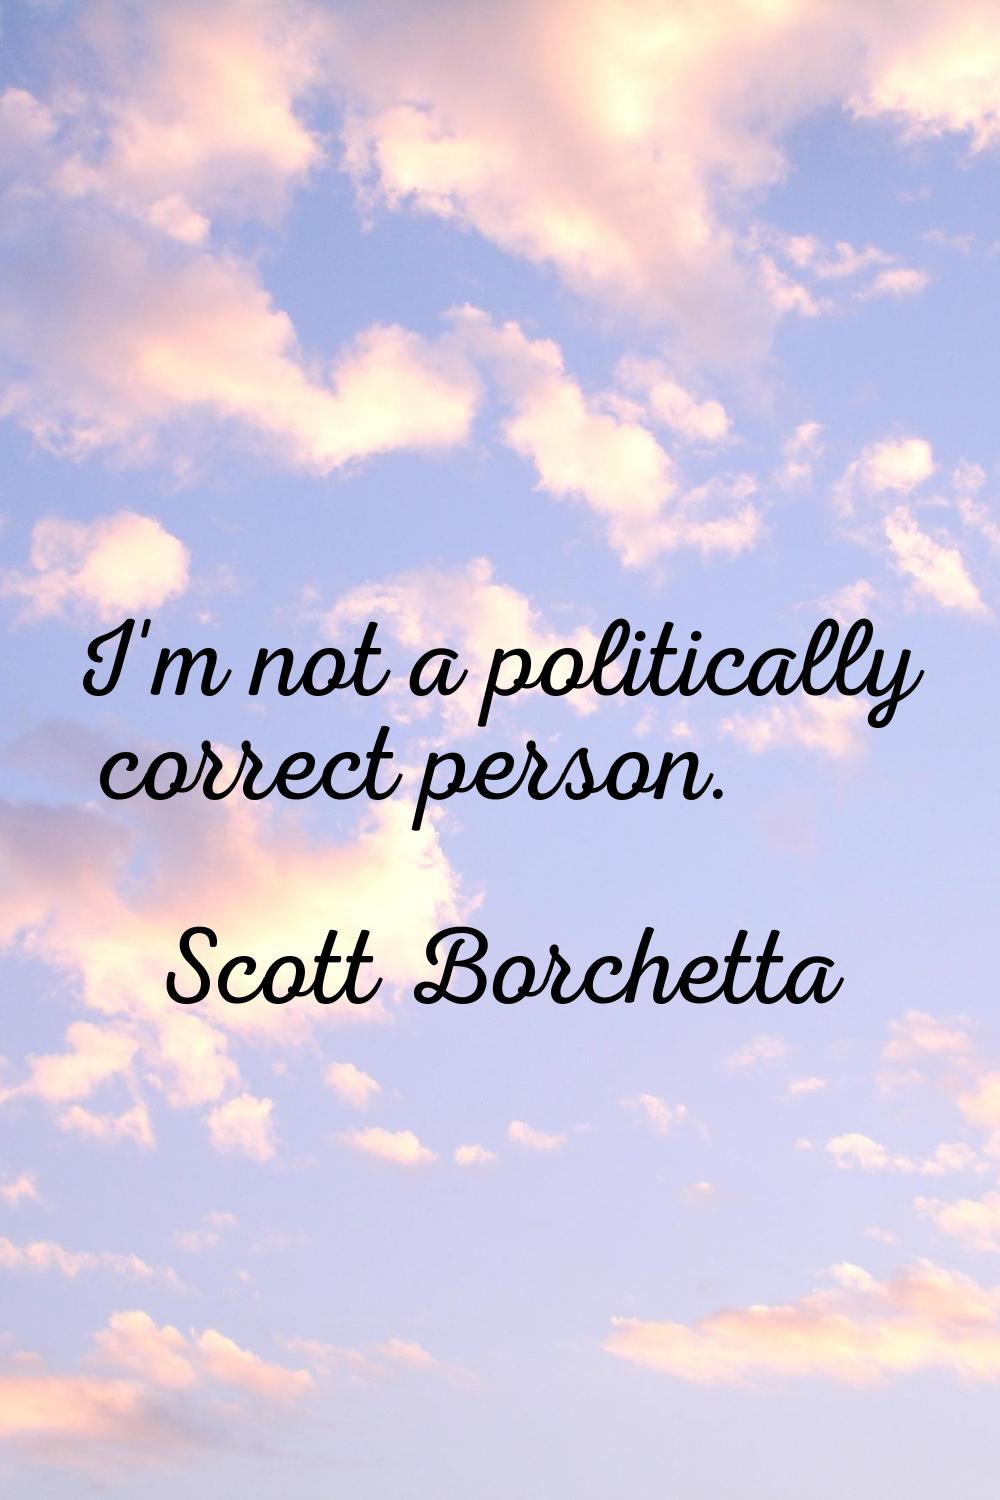 I'm not a politically correct person.